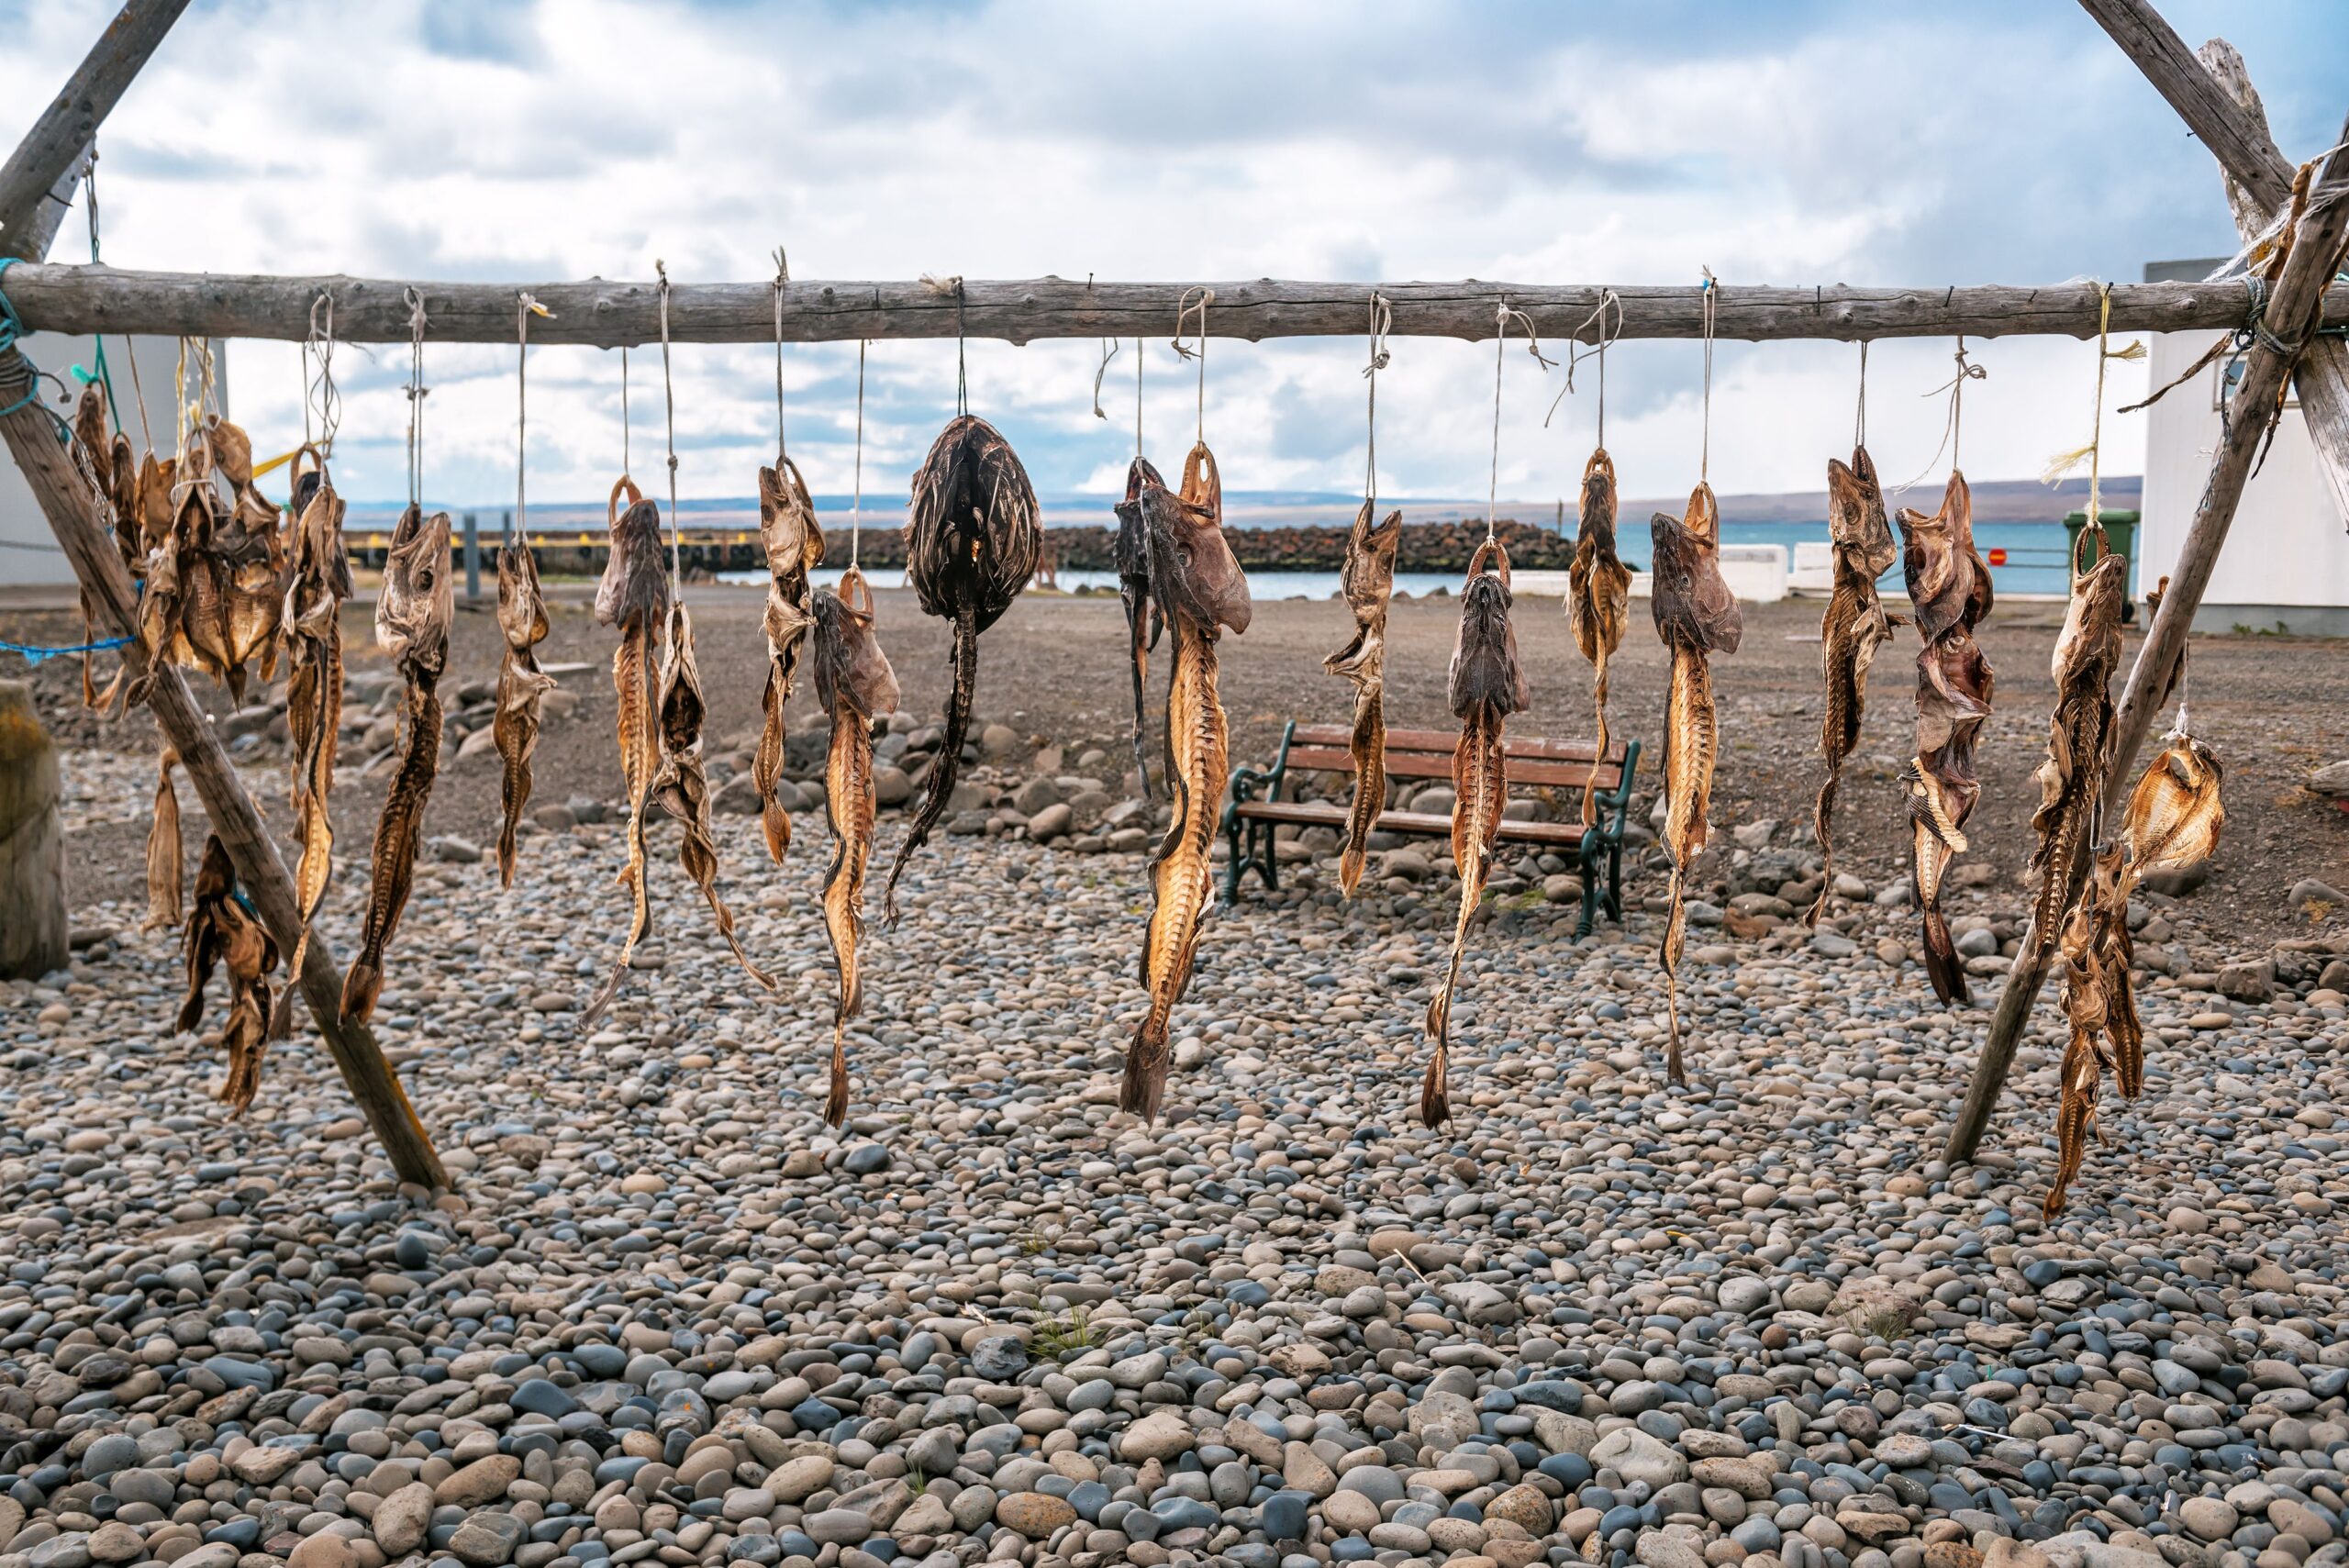 Sušene ribe so specialiteta na Islandiji